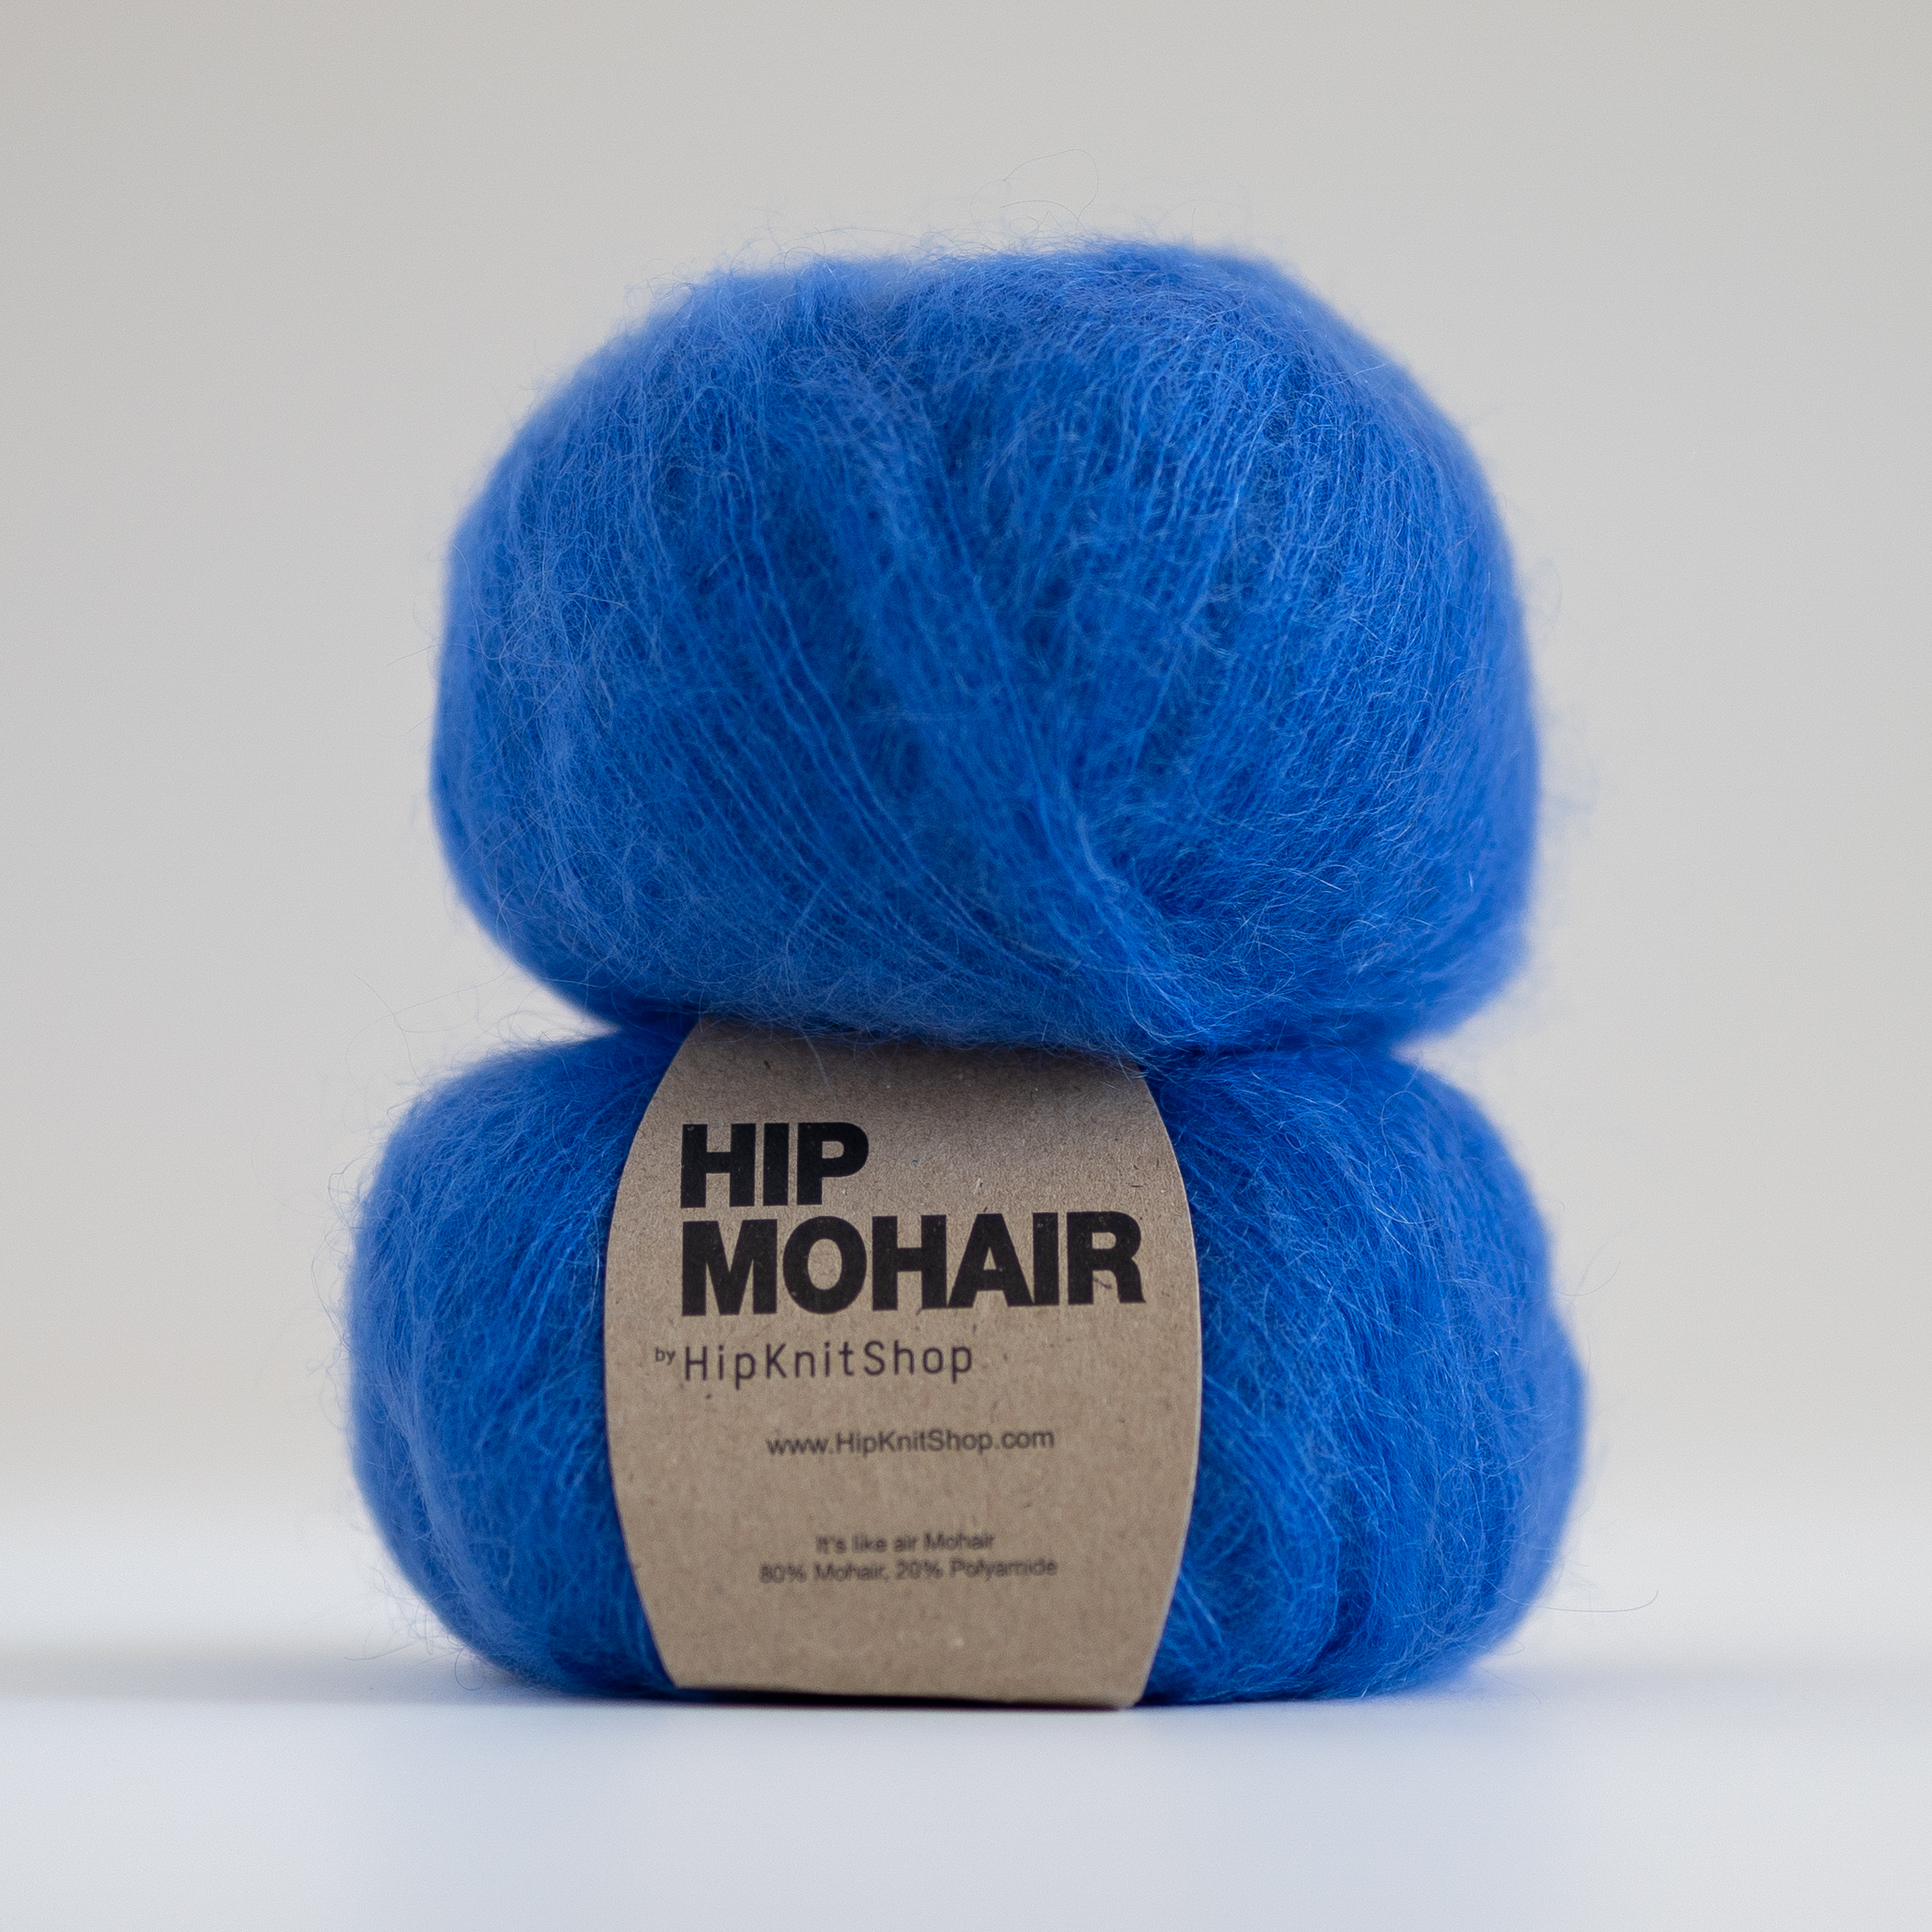 mohair yarn shop - Bubbly blue mohair | Hip Mohair blue yarn - by HipKnitShop - 02/07/2019